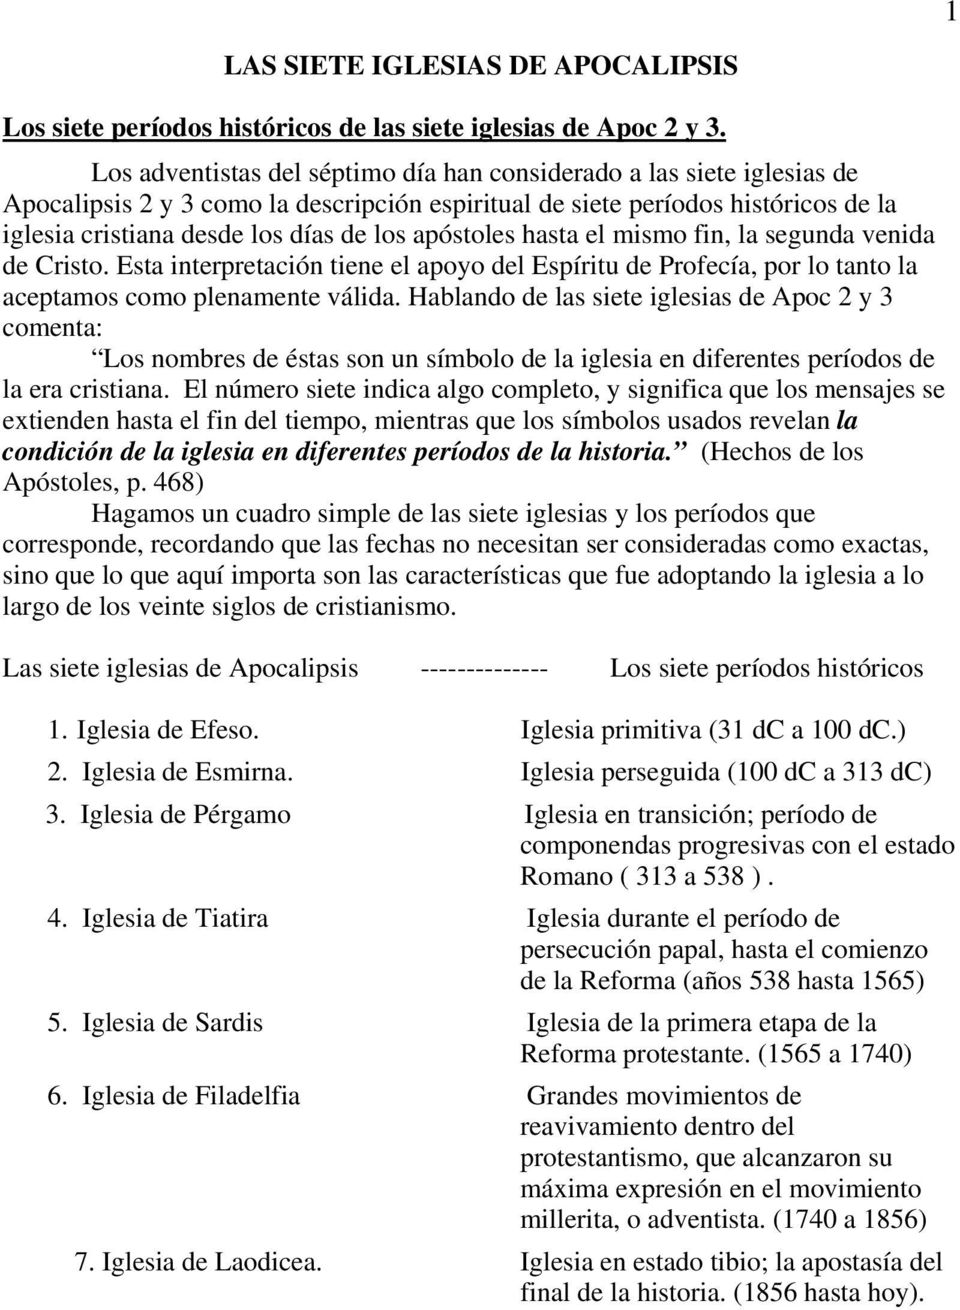 LAS SIETE IGLESIAS DE APOCALIPSIS - PDF Descargar libre